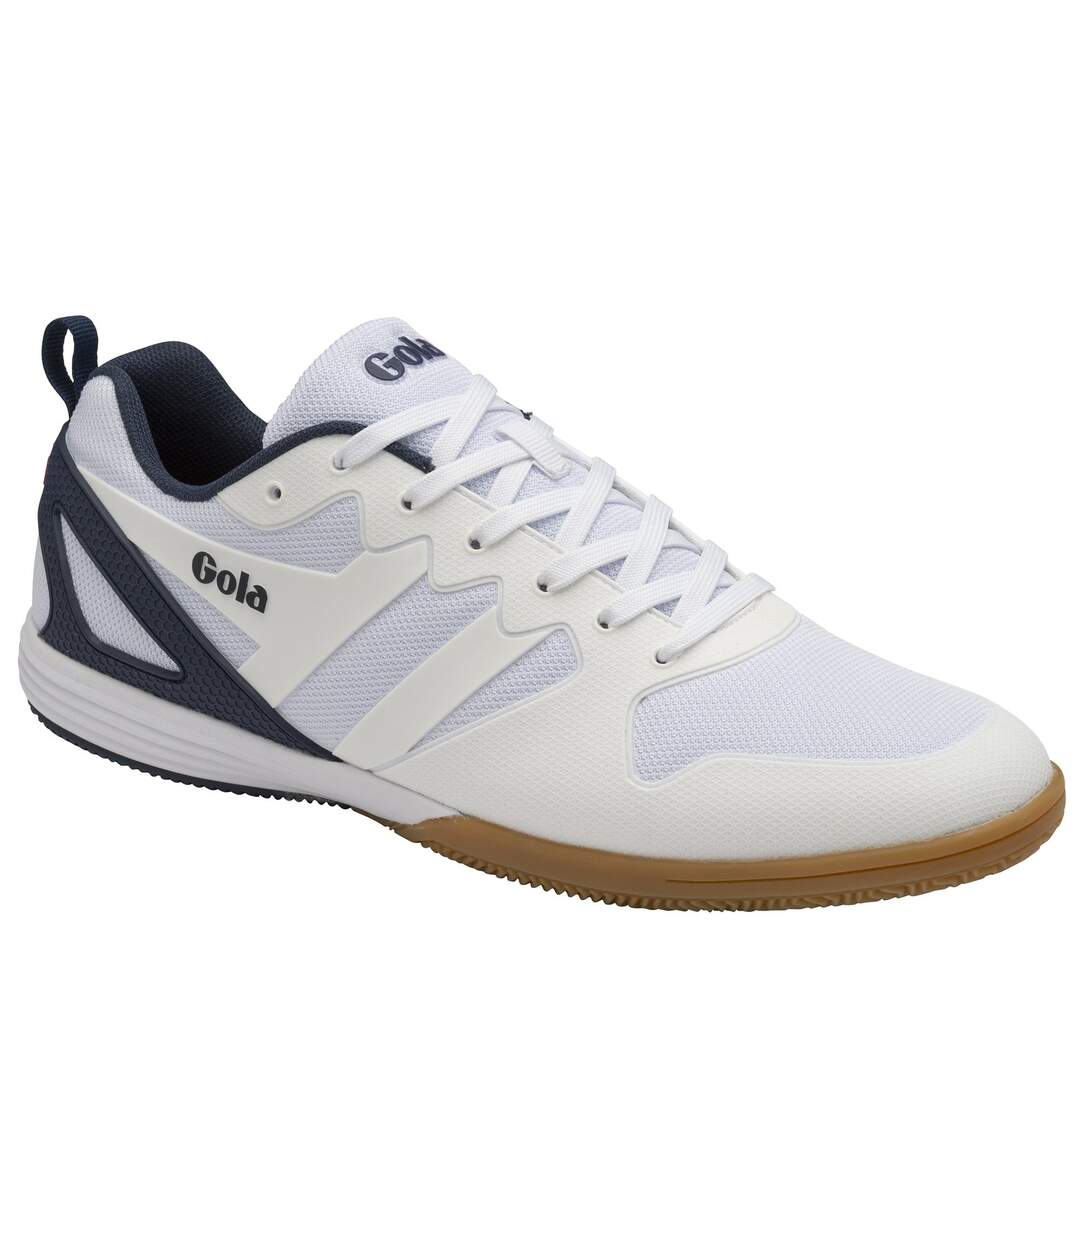 Gola - Chaussures de salle ECHO TX - Homme (Blanc / Bleu marine / Rouge) - UTJG715